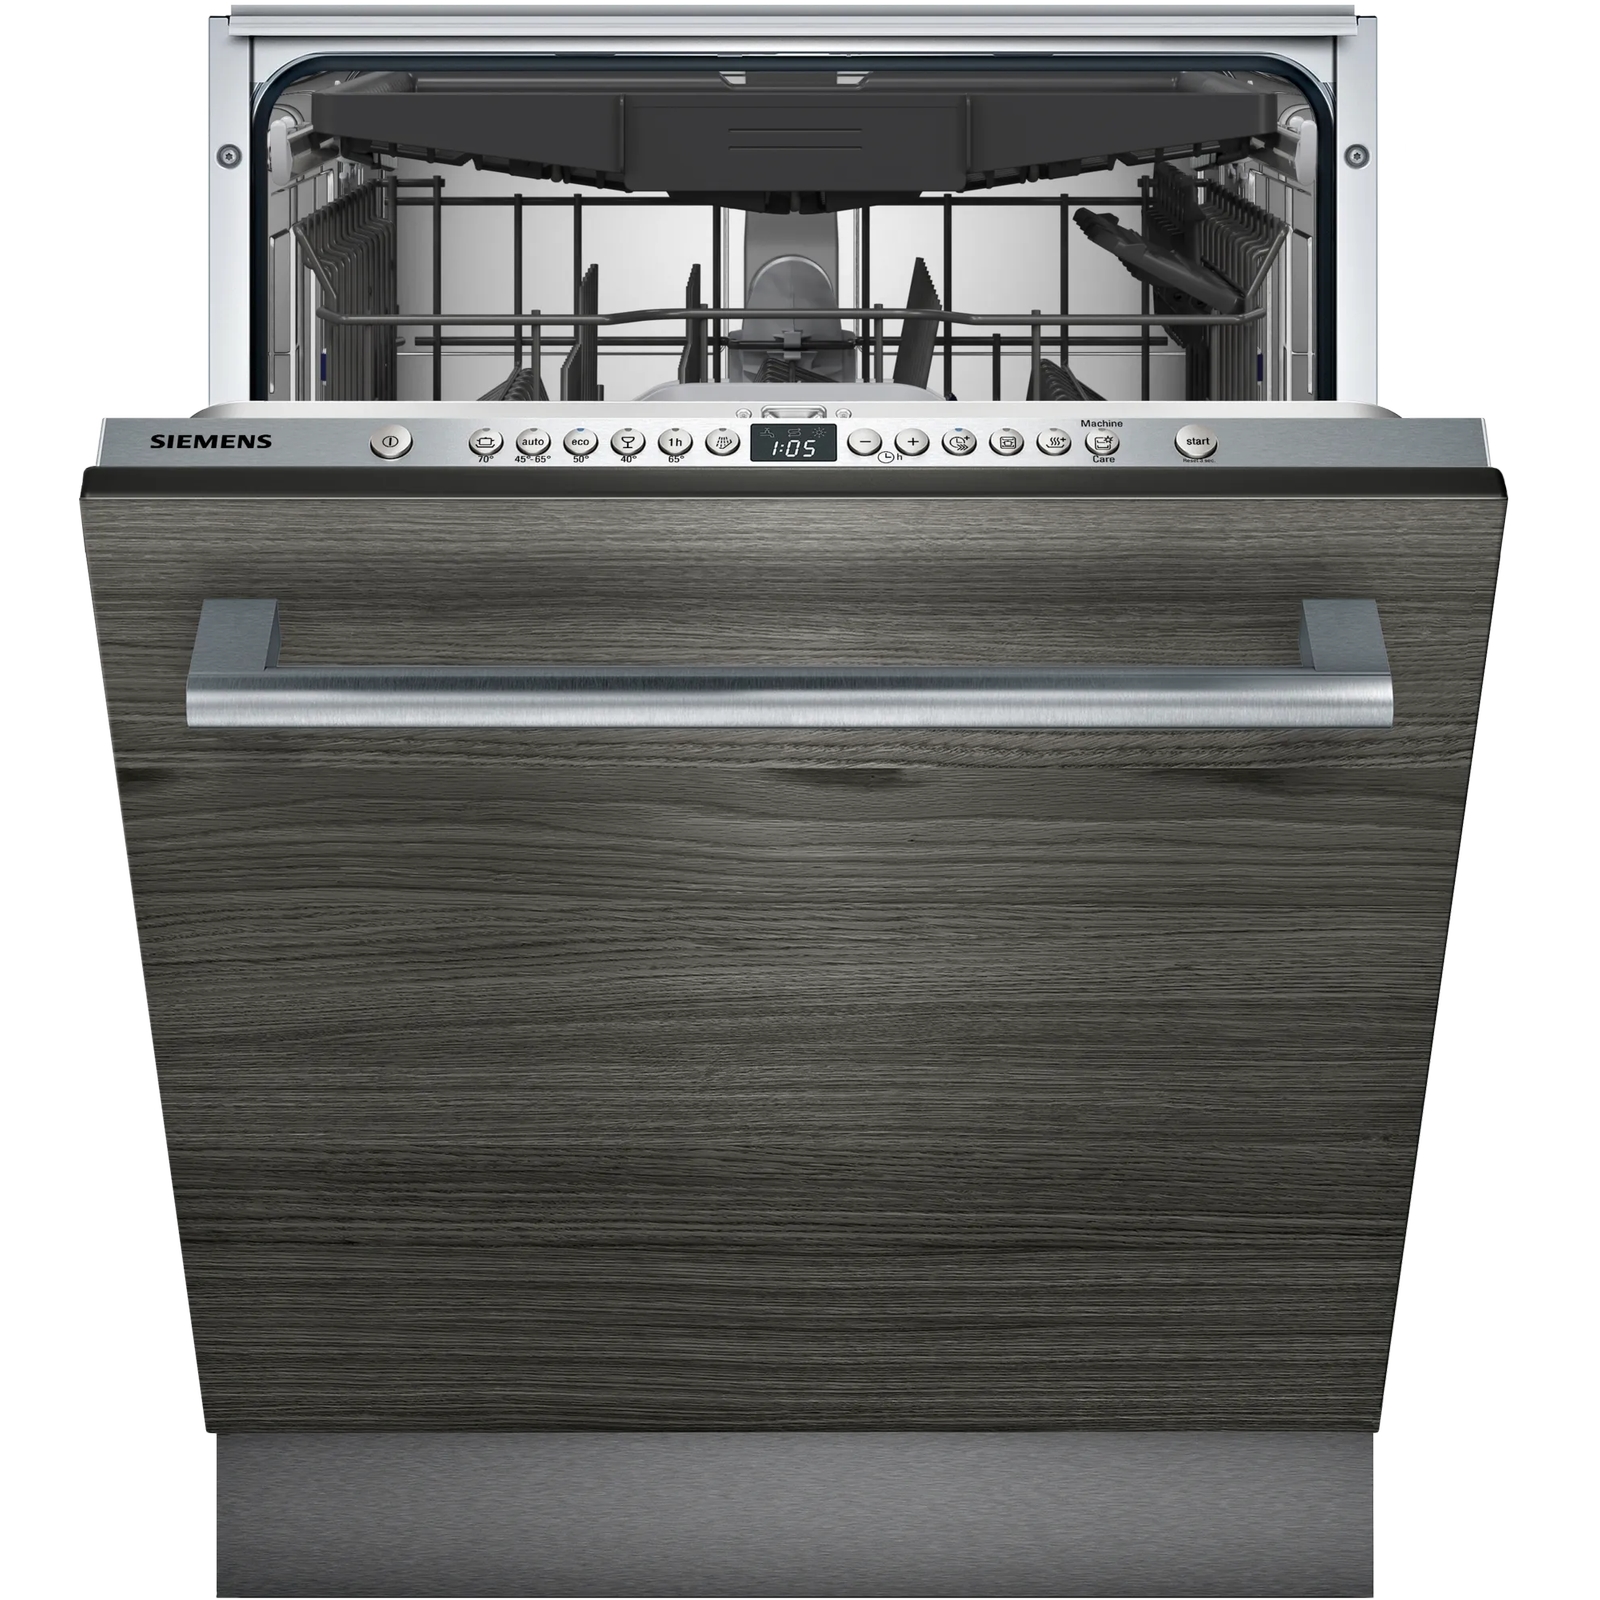 Встраиваемая посудомоечная машина Siemens SN636X06KE встраиваемая посудомоечная машина 60cm sn63hx60ae siemens